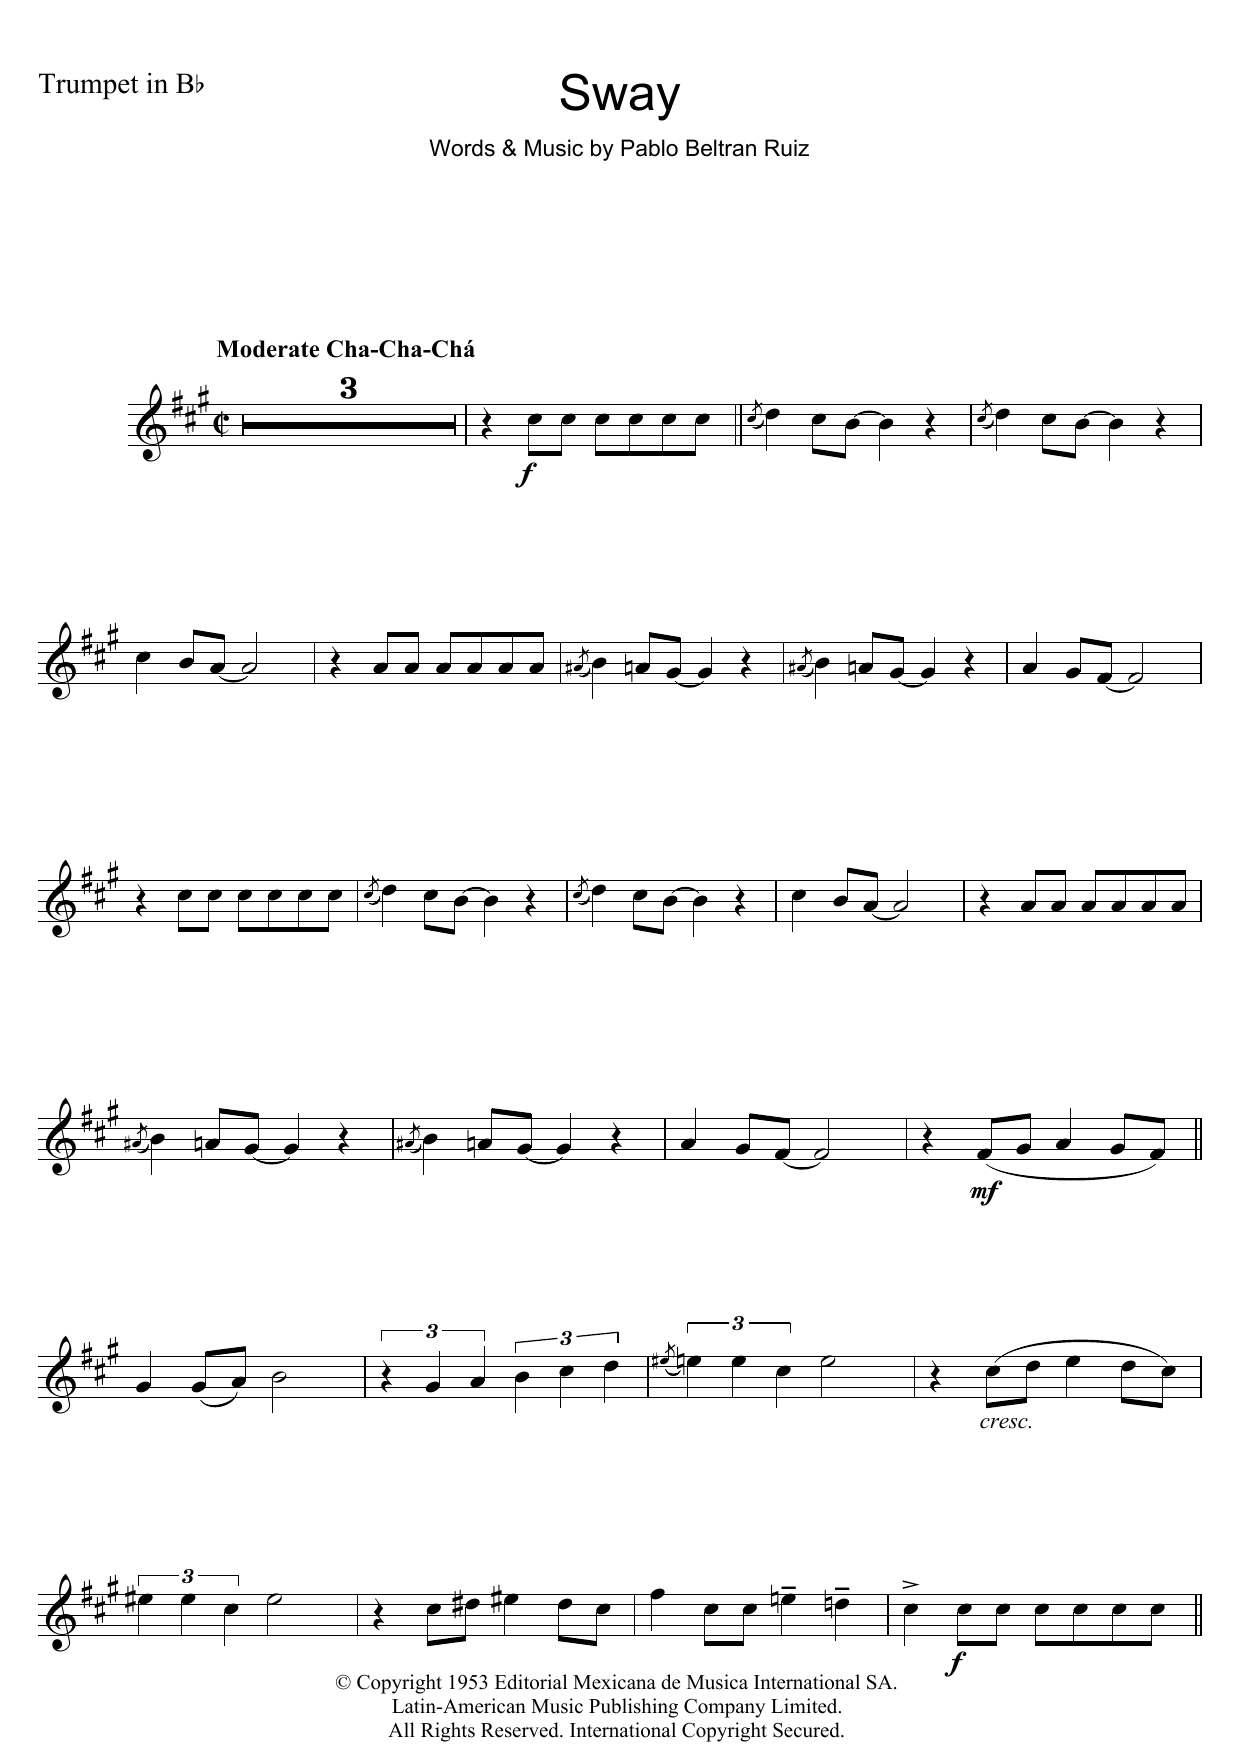 Pablo Beltran Ruiz Sway (Quien Sera) Sheet Music Notes & Chords for Flute - Download or Print PDF